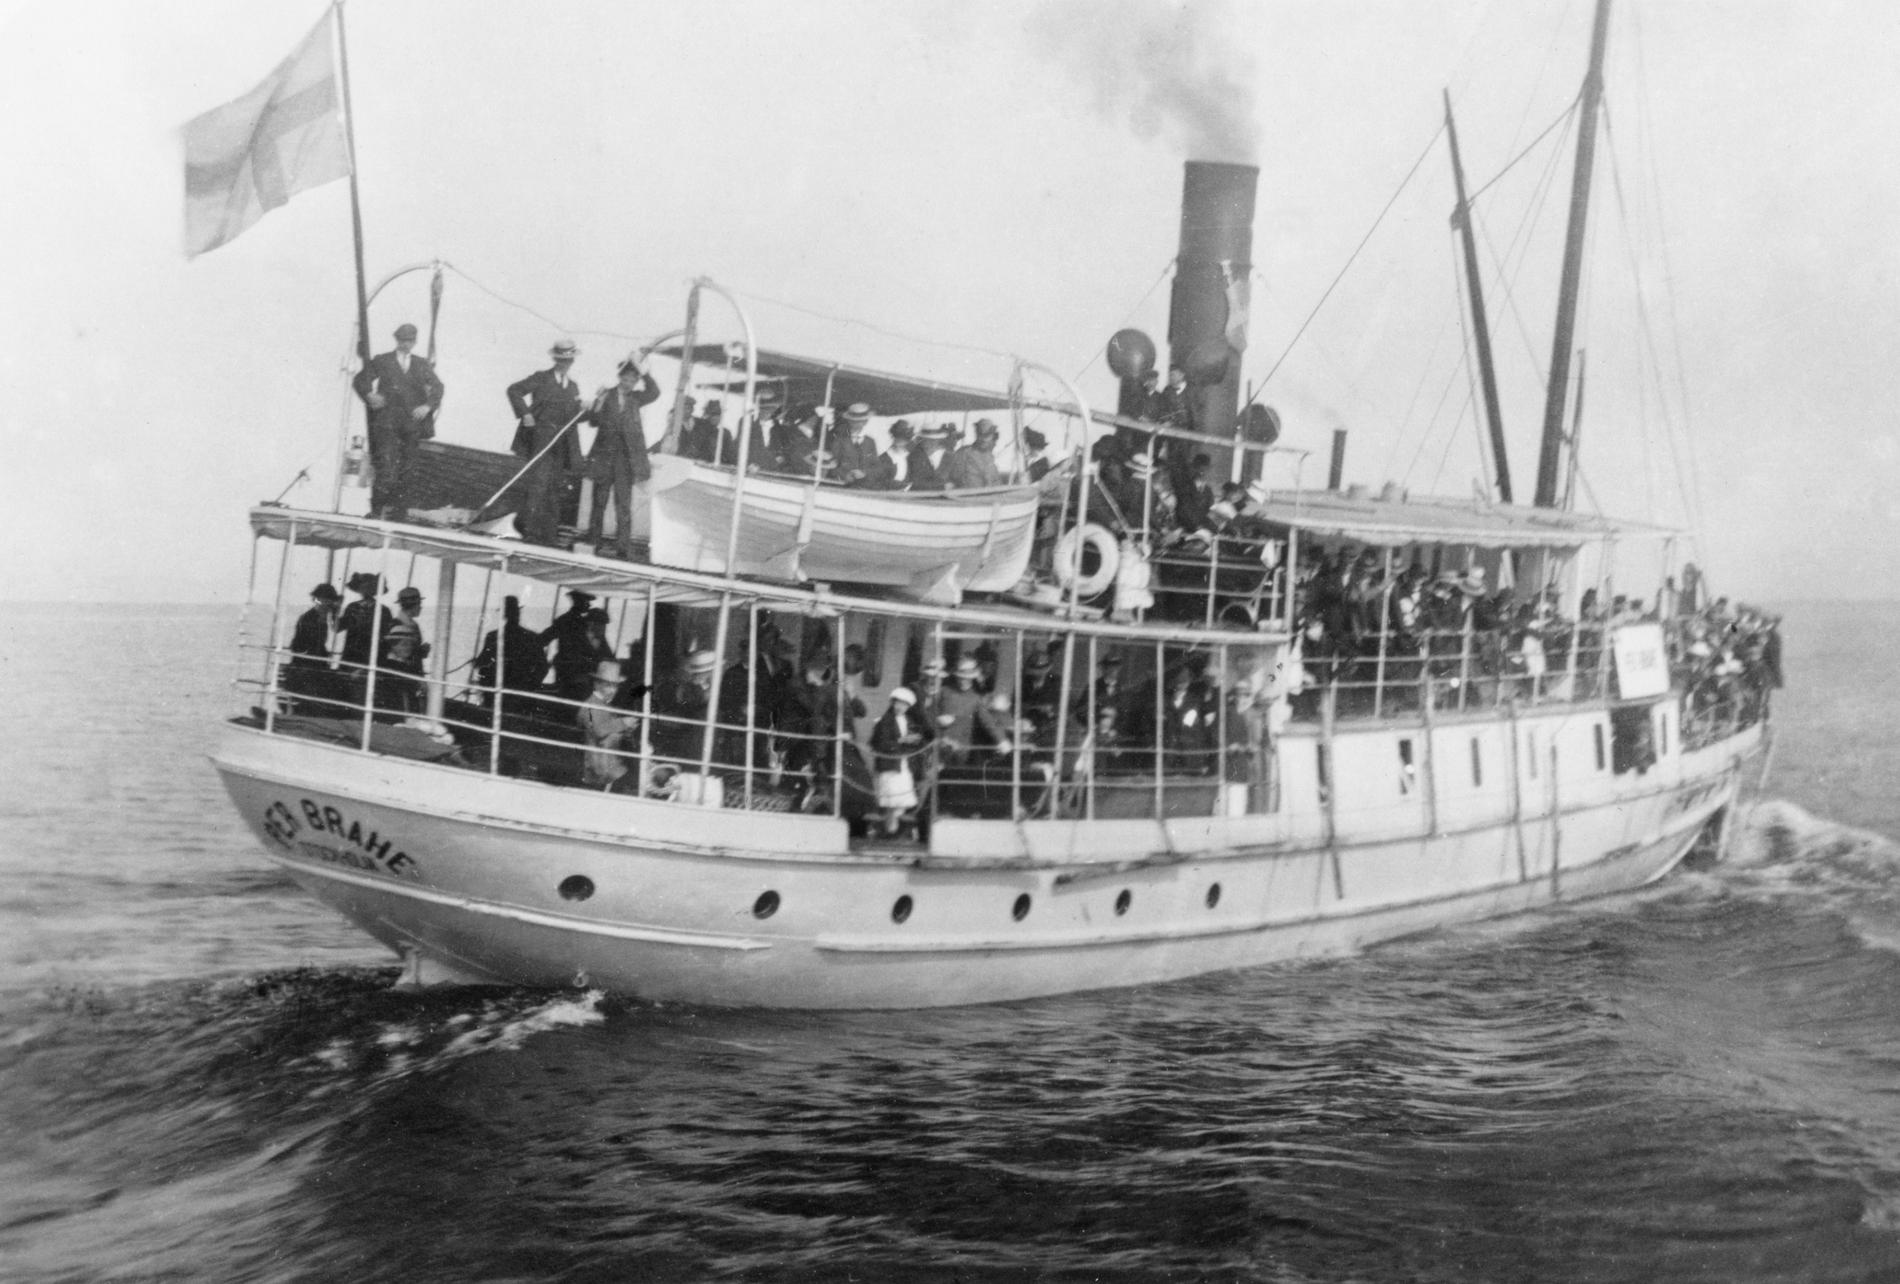 Trotjänaren ”Pelle”, Per Brahe, gick under 1918, alla ombord dog.